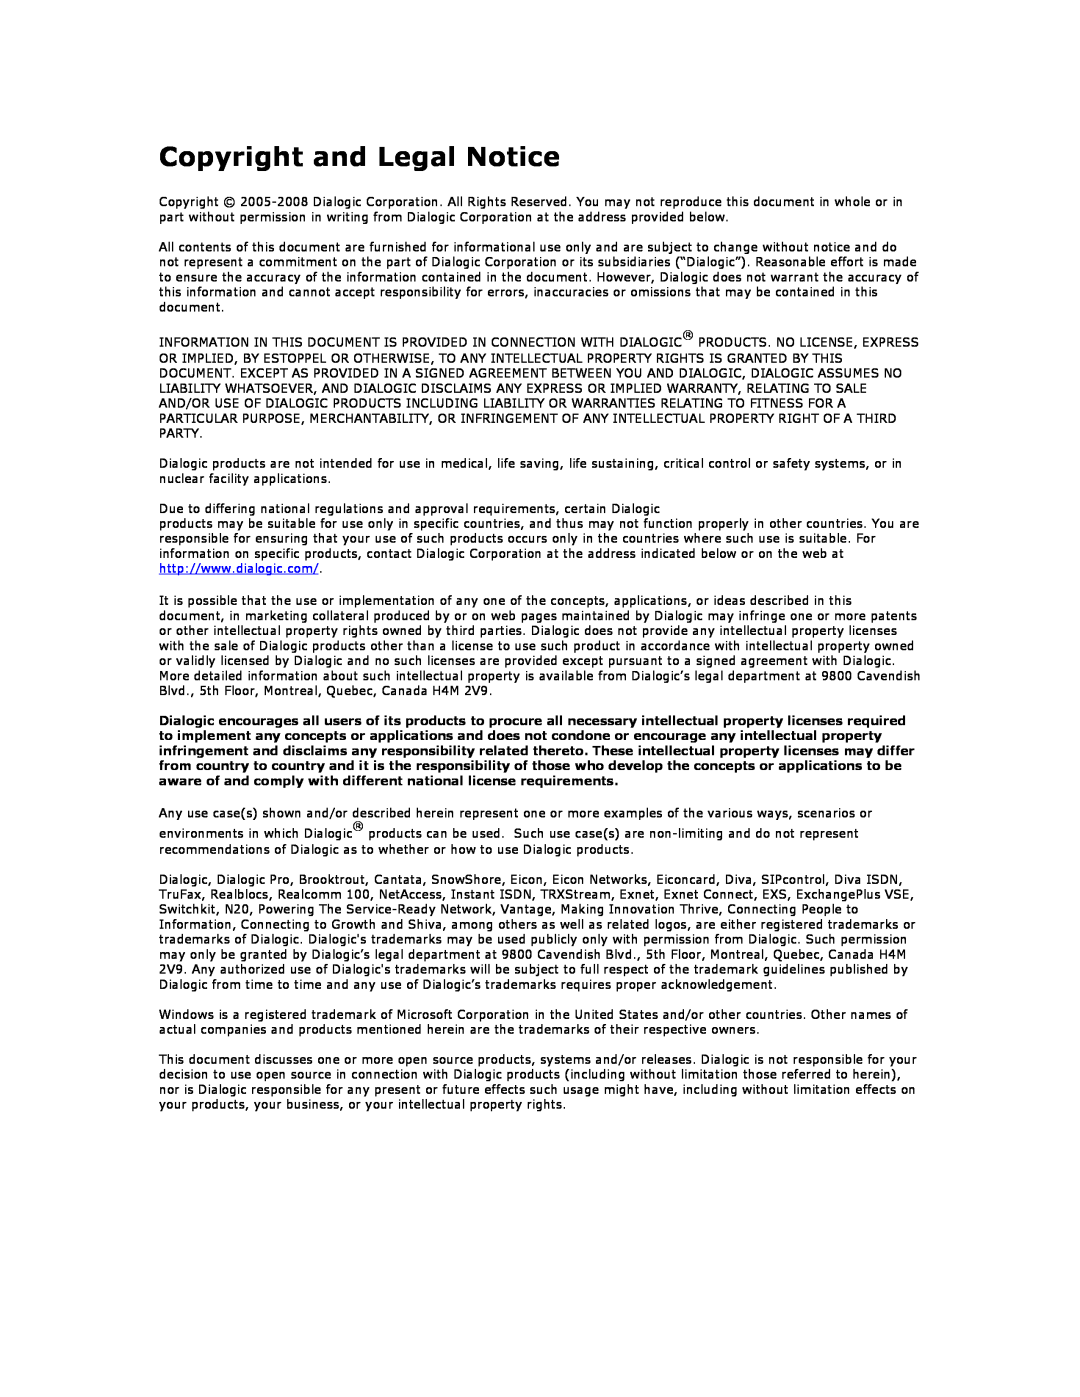 Dialogic 1010 manual Copyright and Legal Notice 